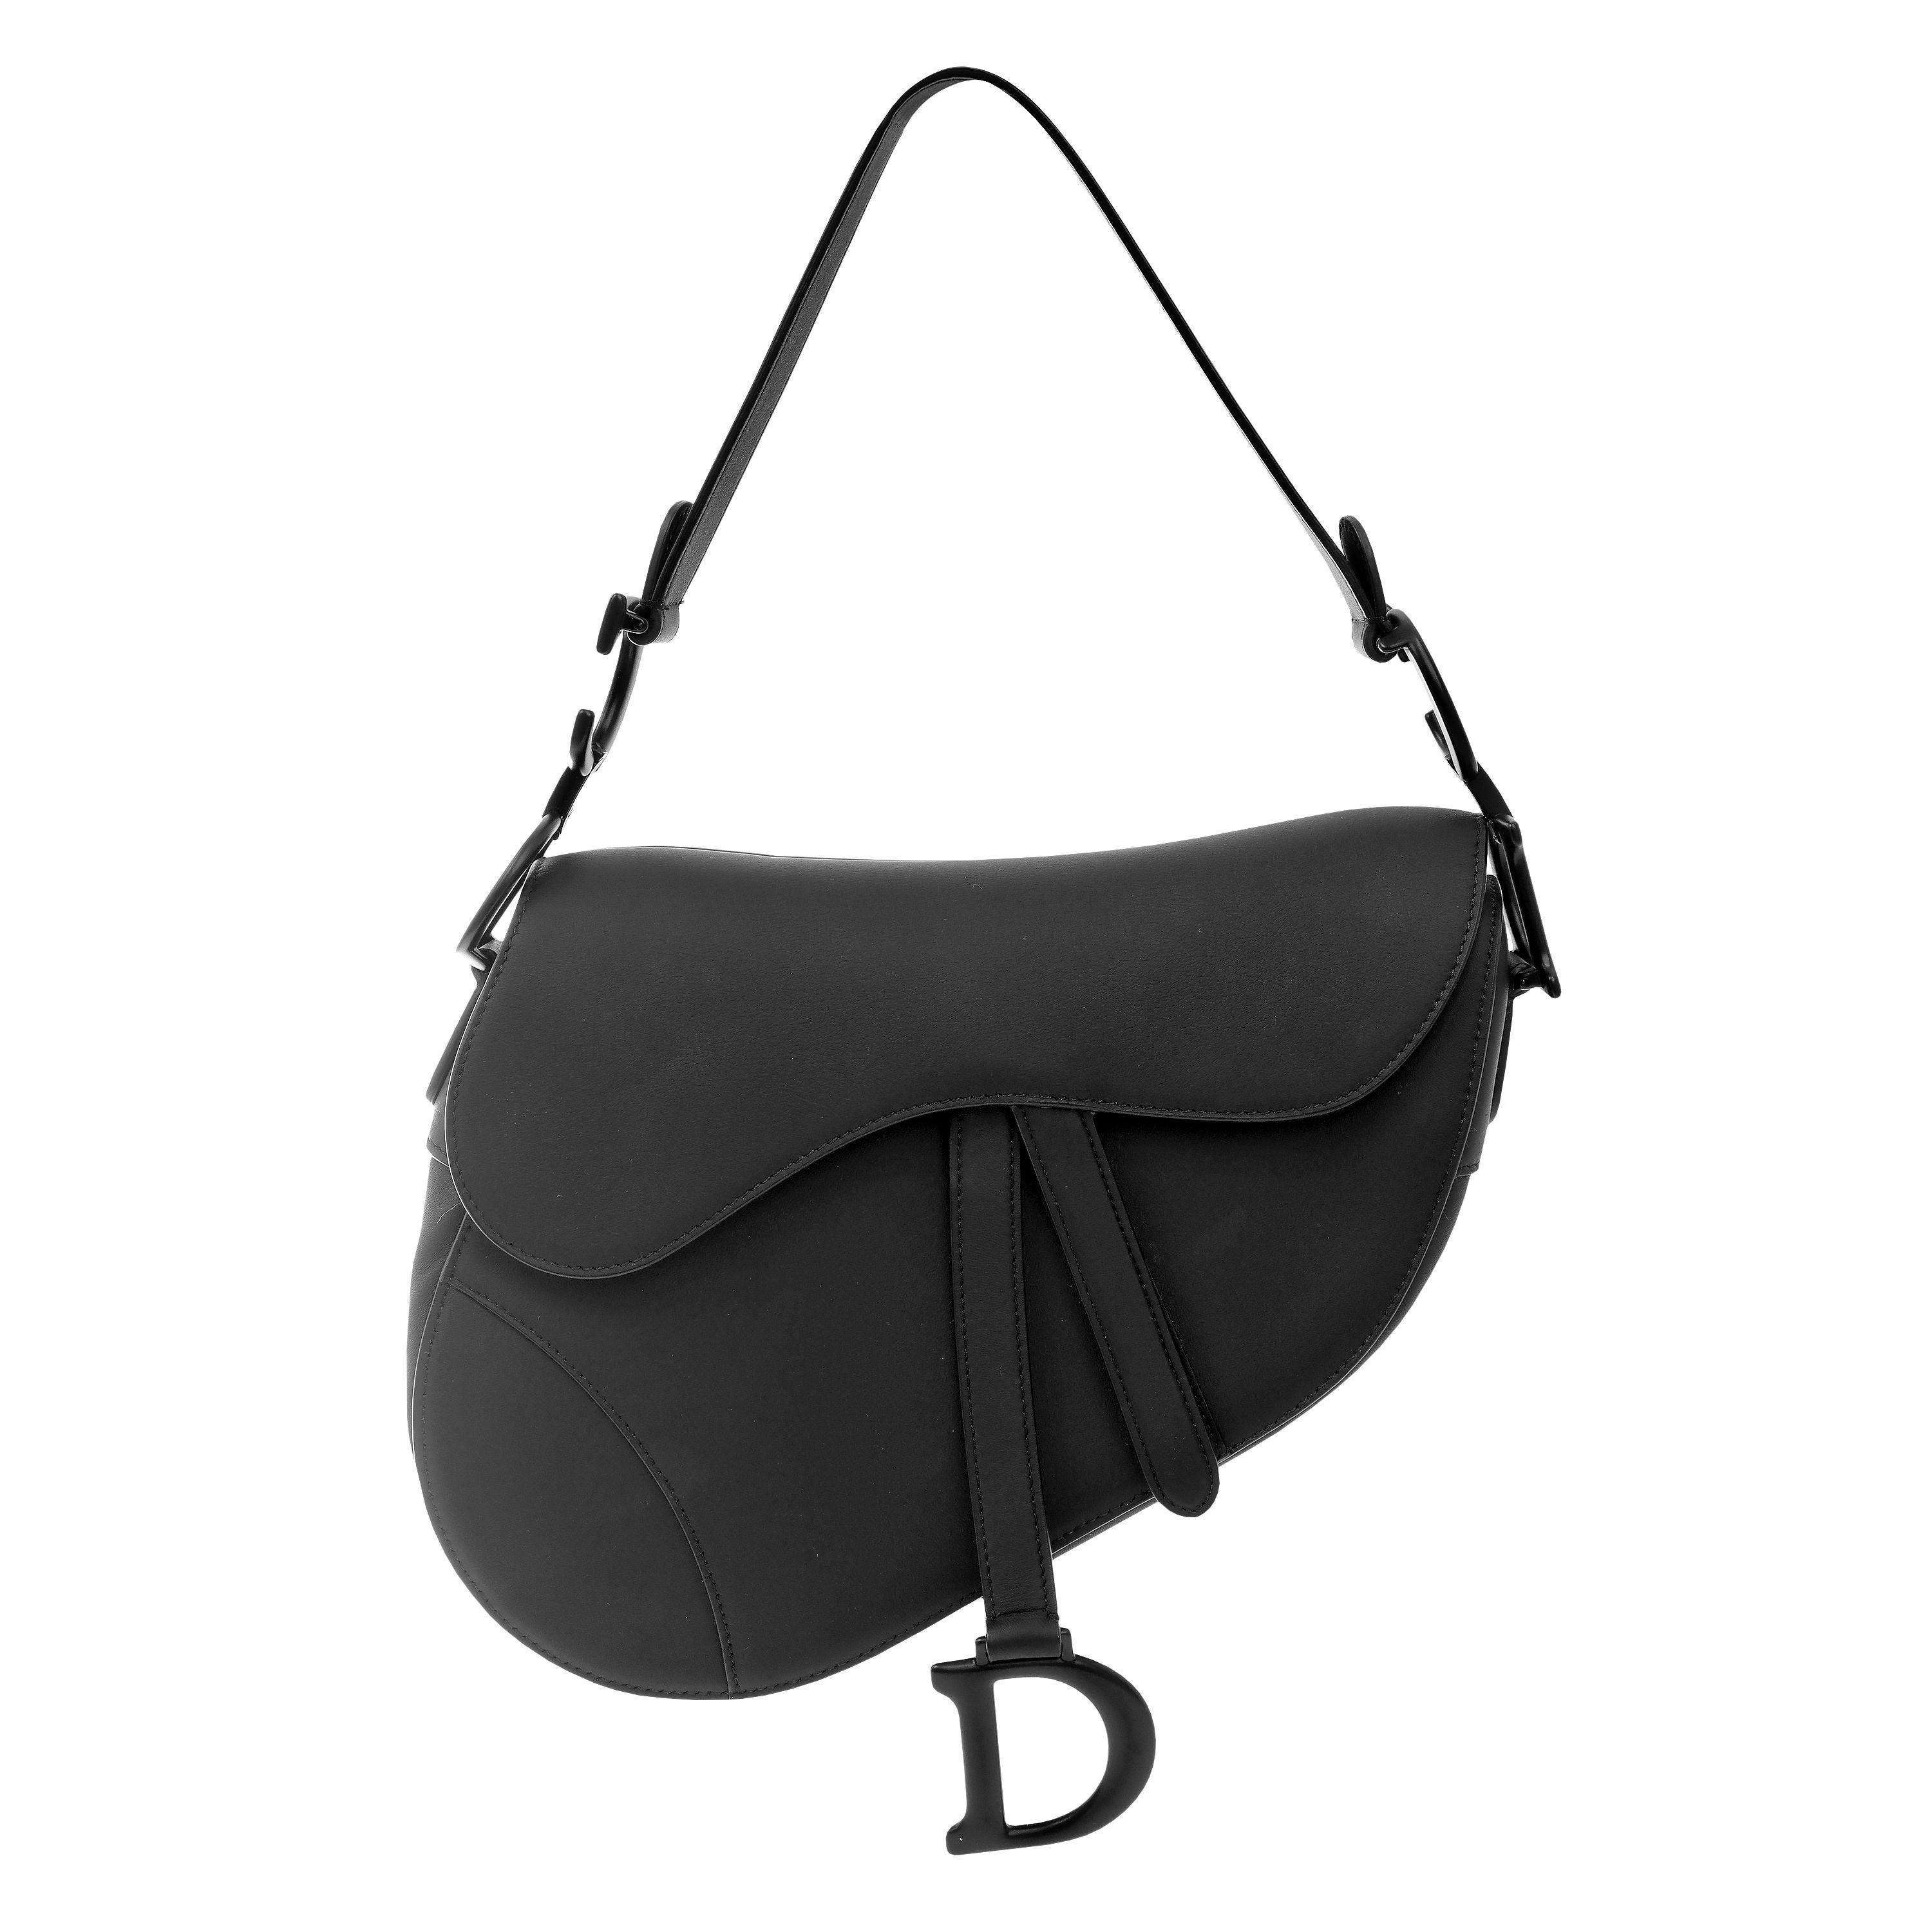 Women's Christian Dior So Black Leather Saddle Bag